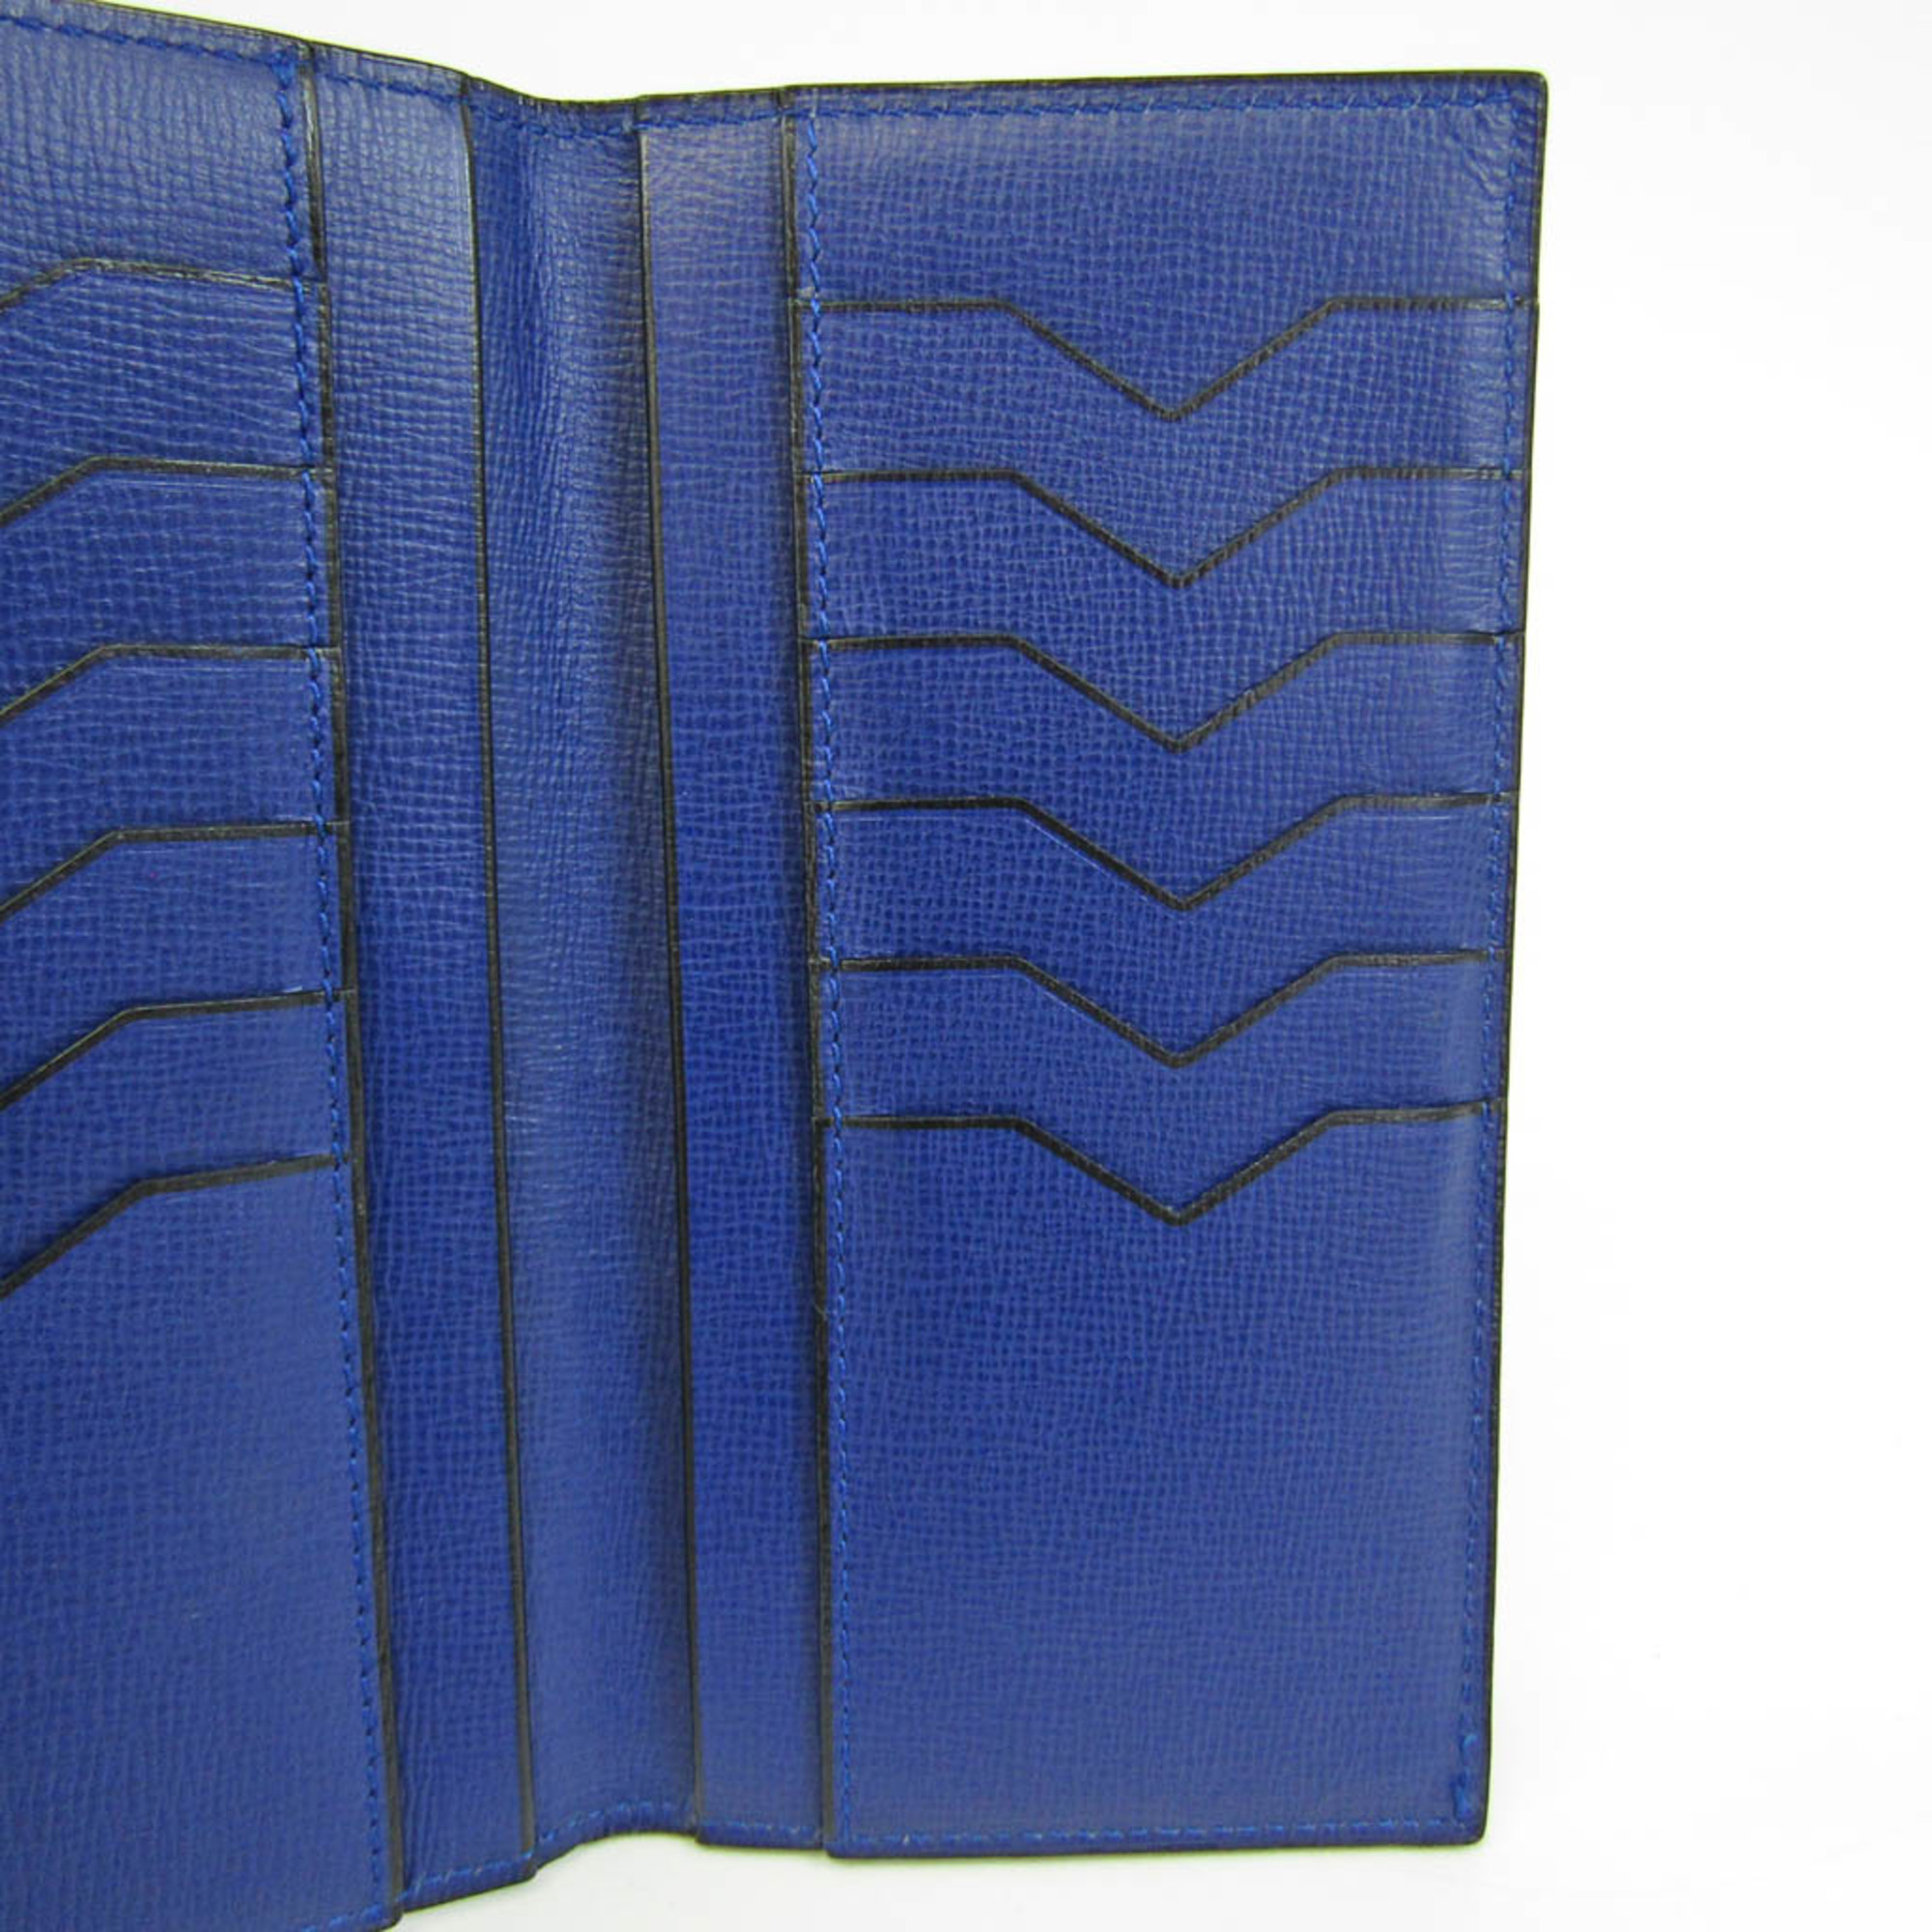 Valextra V8L21 Women,Men Leather Long Bill Wallet (bi-fold) Royal Blue